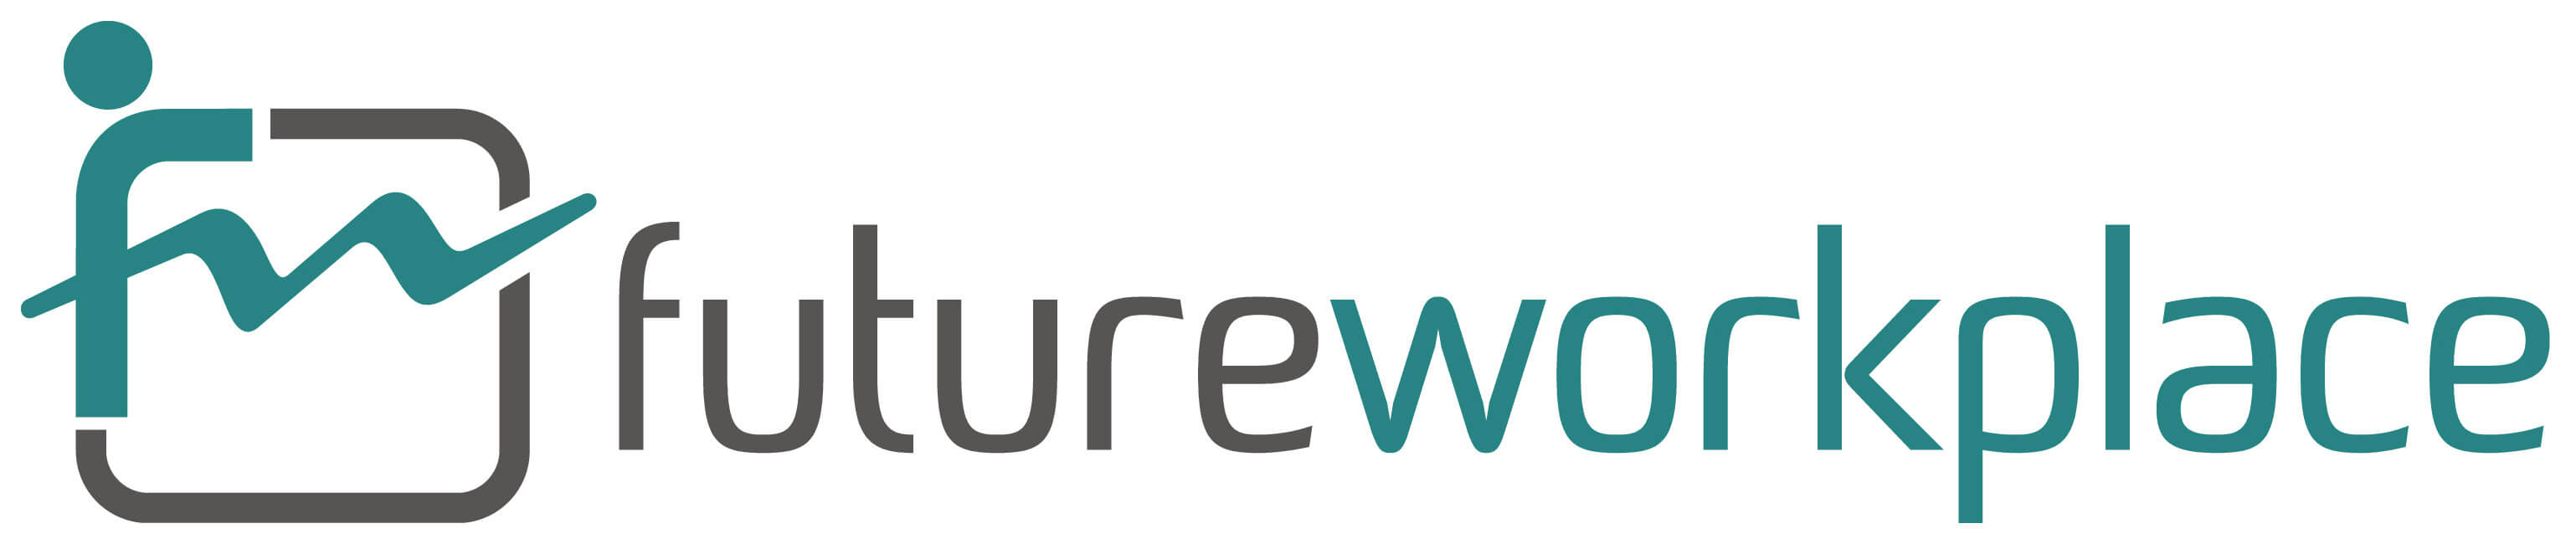 Future Workplace Logo 1 - No Tagline[1]